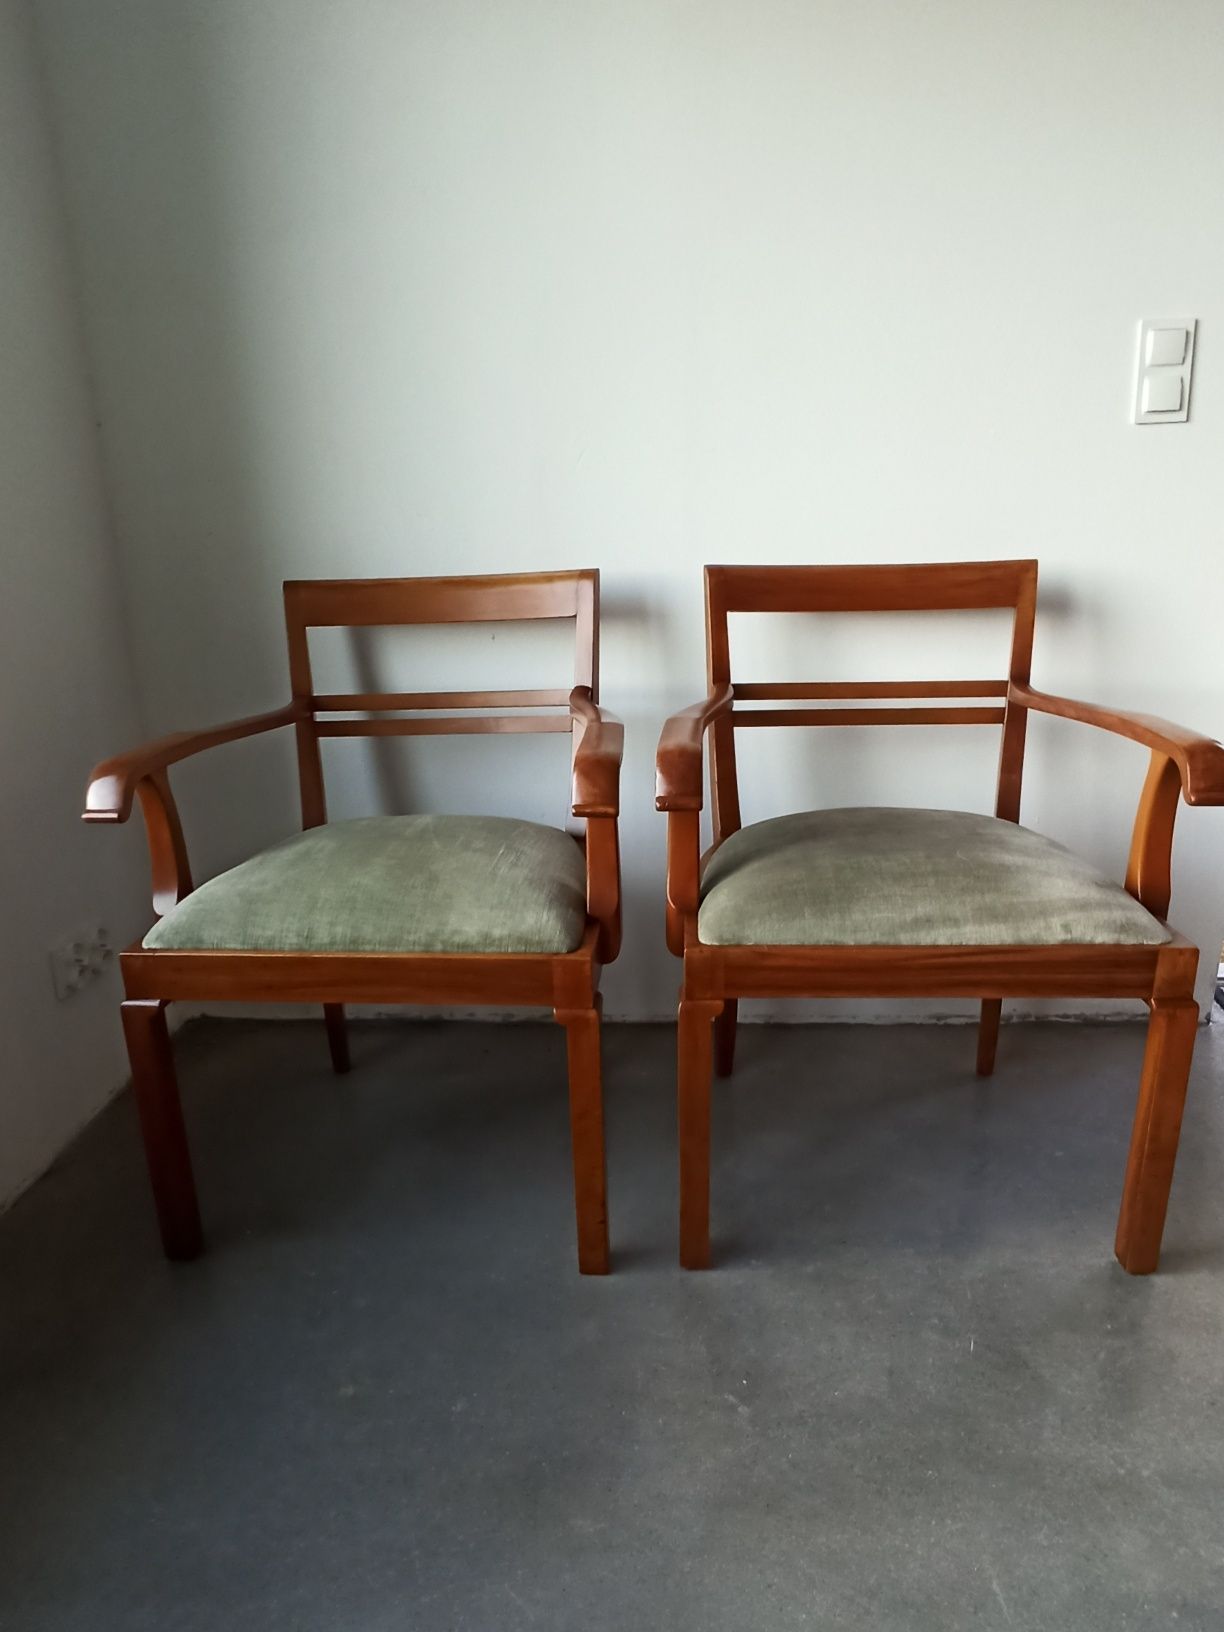 Stare solidne Fotele tekowe  po renowacji do biurka 2 szt.